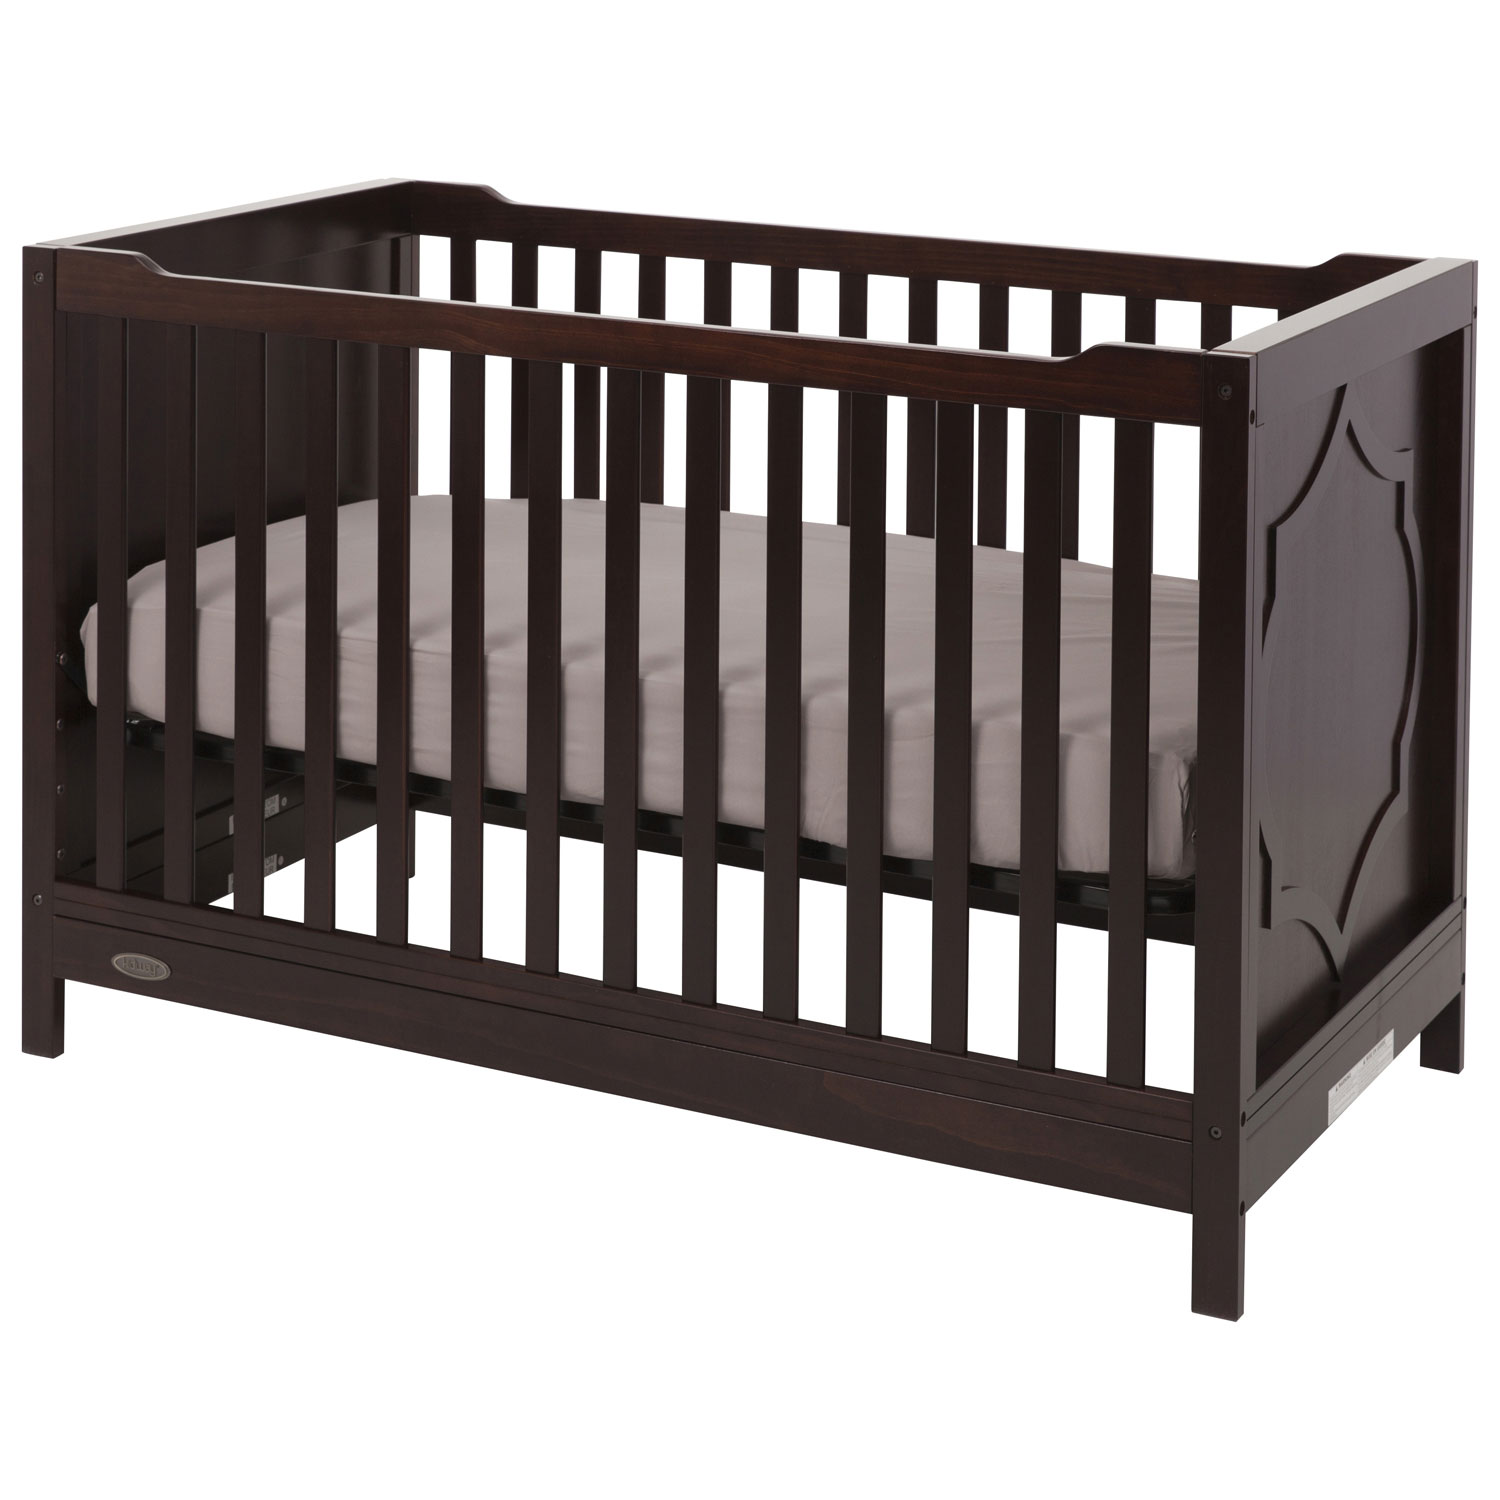 kidiway crib